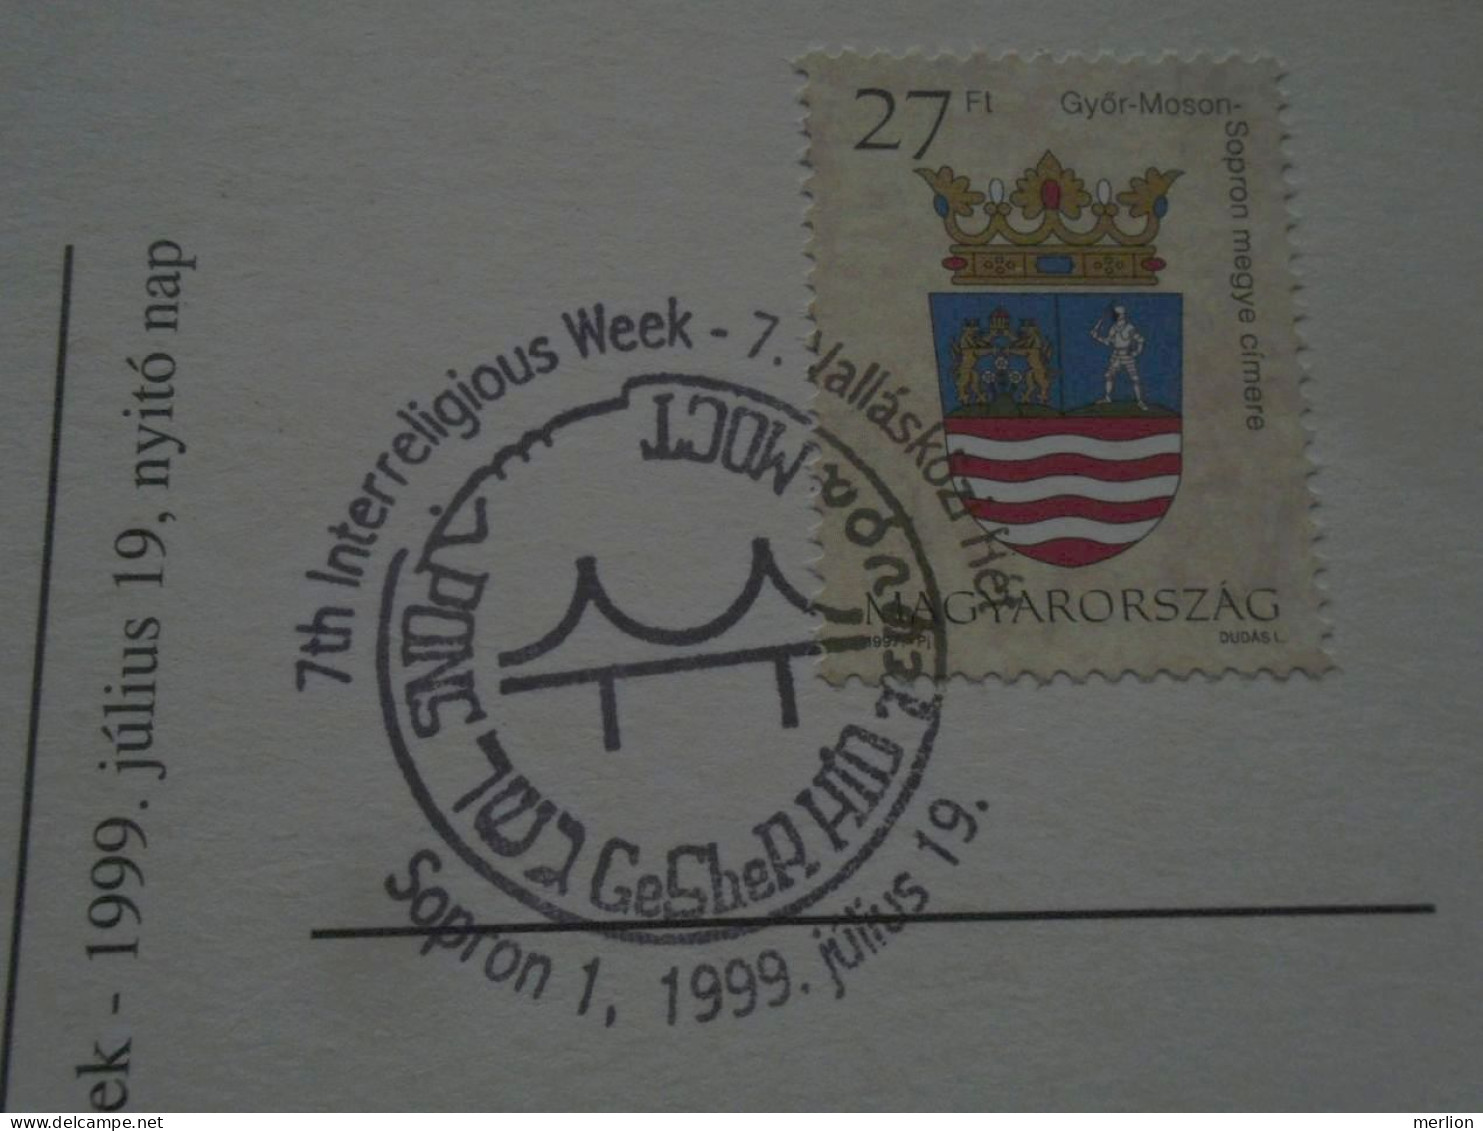 D201009  Hungary  Sopron  - Special Postmark - Interfaith Week Sopron - Jewish Day 1999 Gesher Híd - Judaika, Judentum